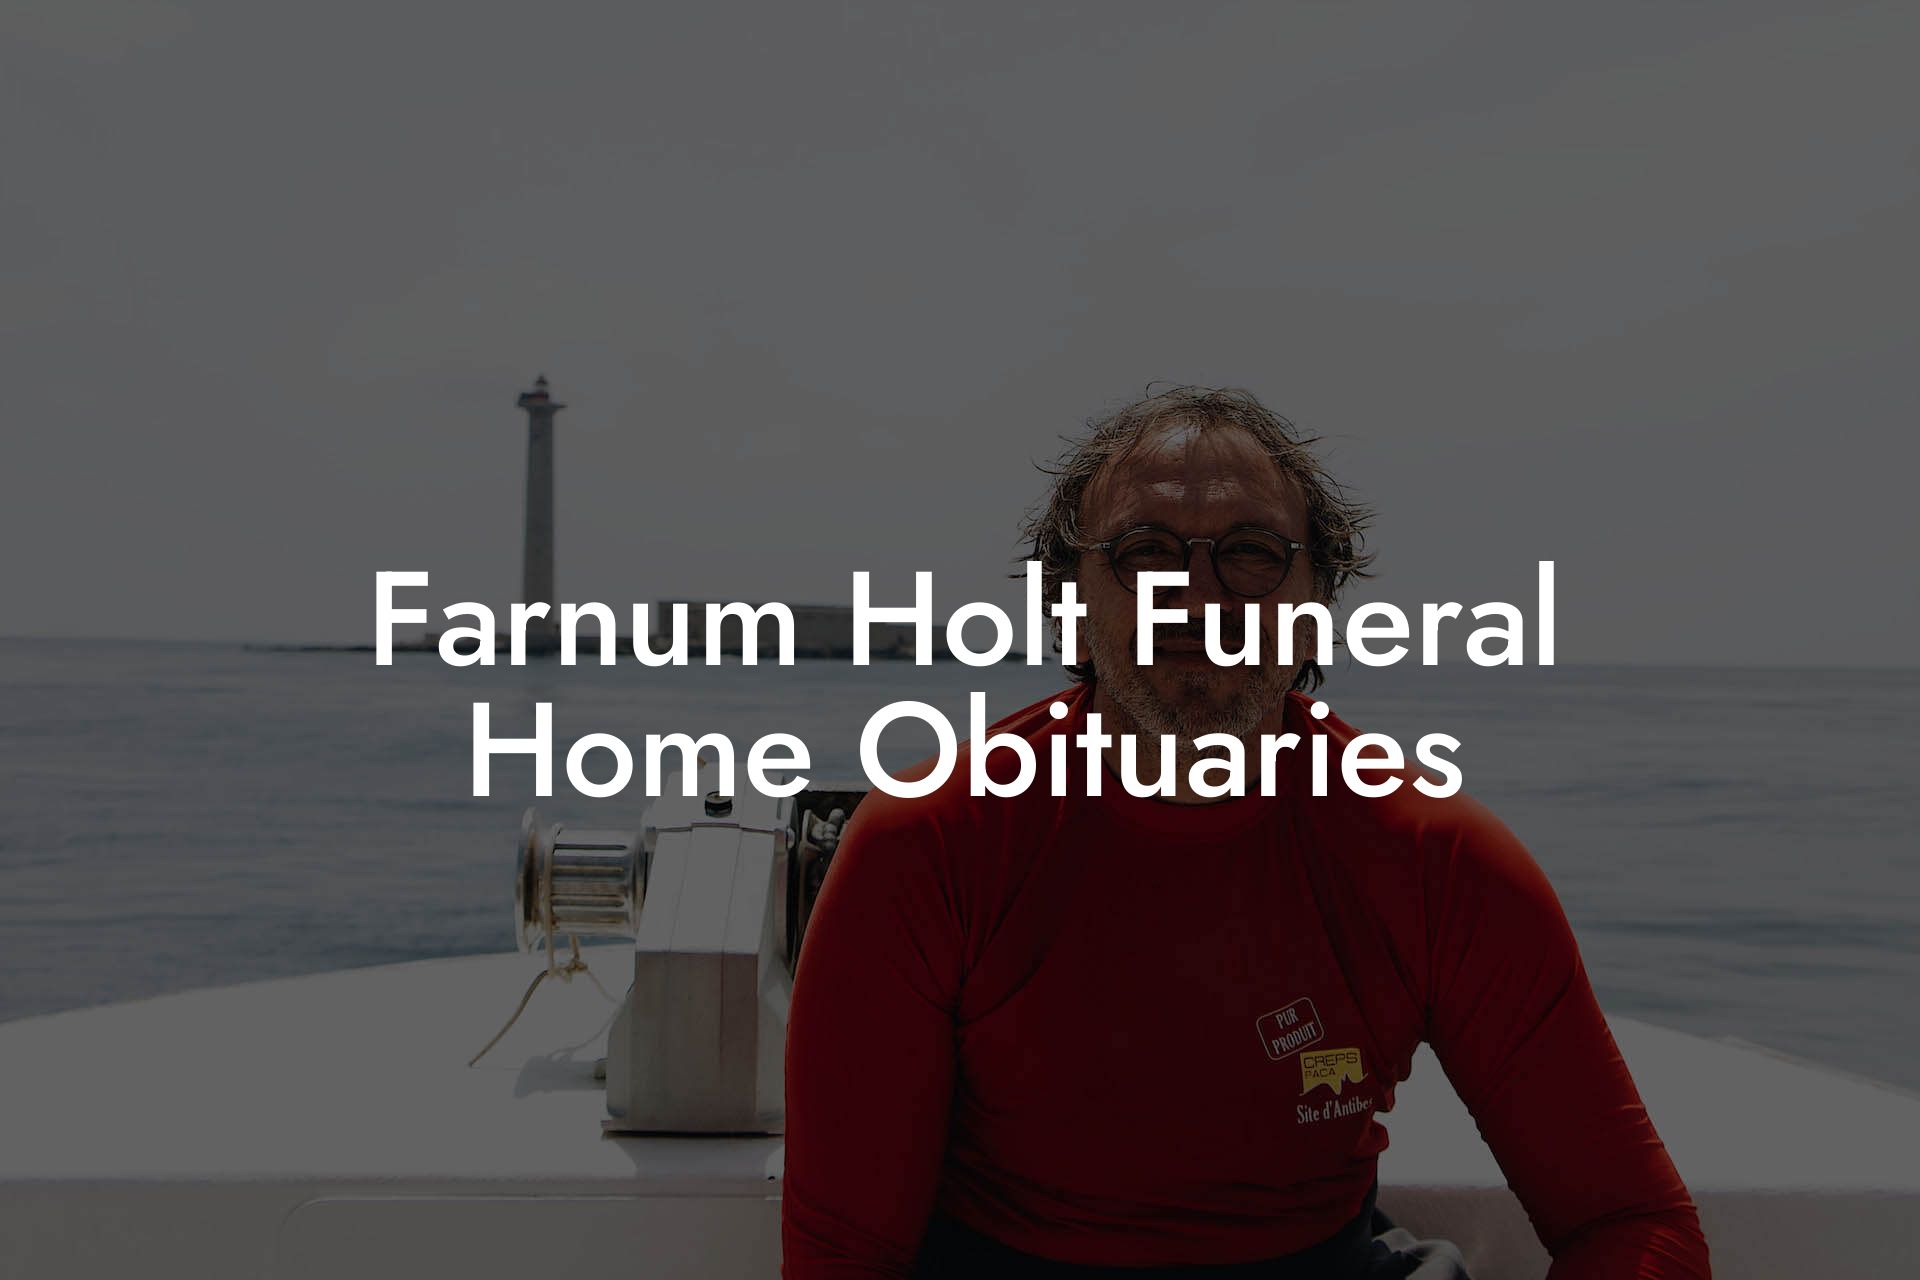 Farnum Holt Funeral Home Obituaries